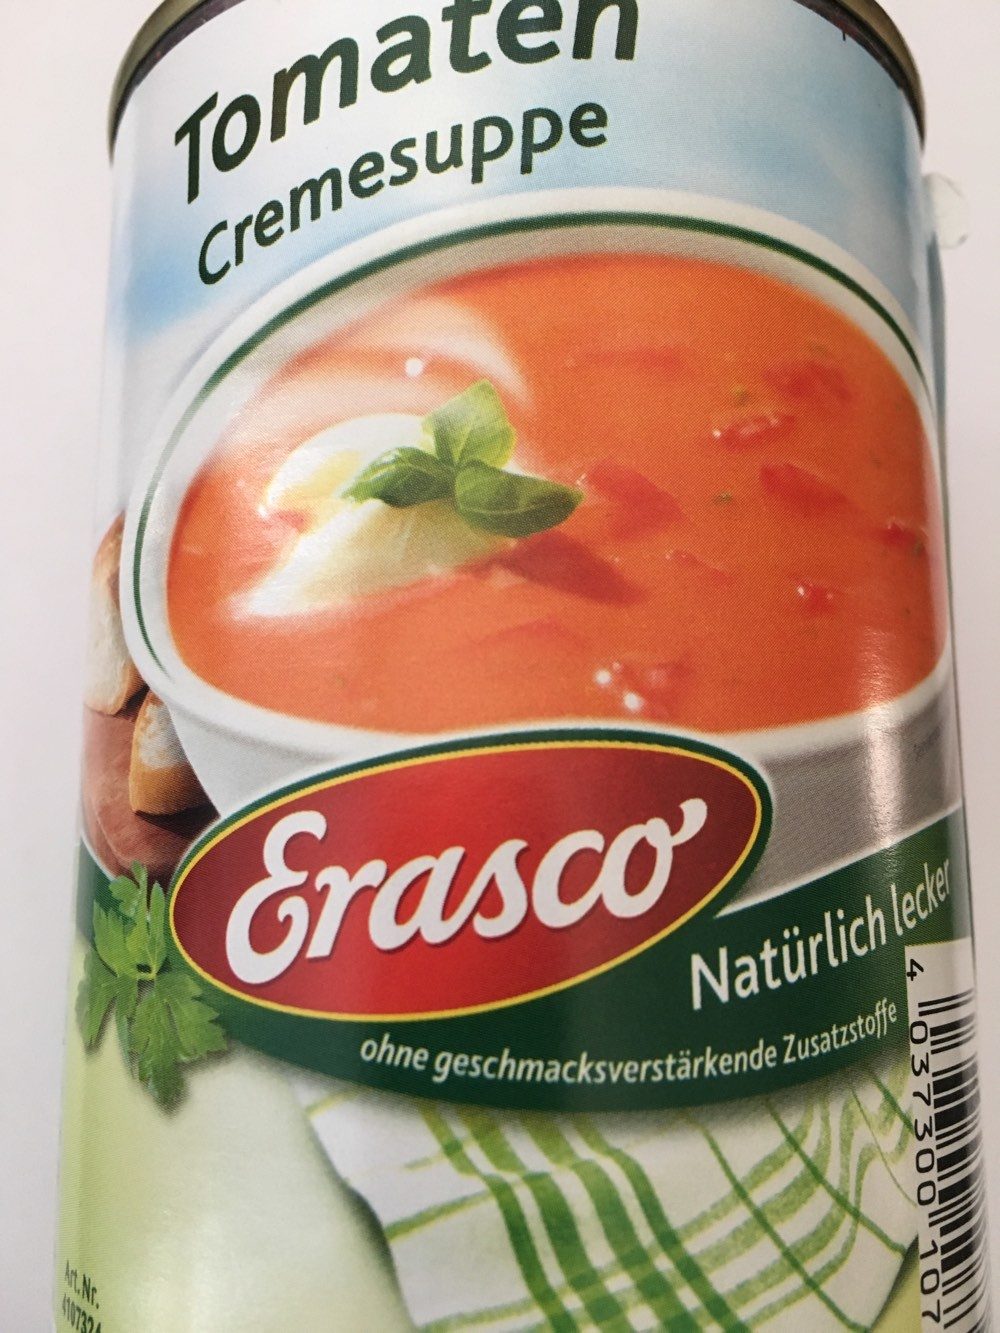 Tomatencreme suppe - Produkt